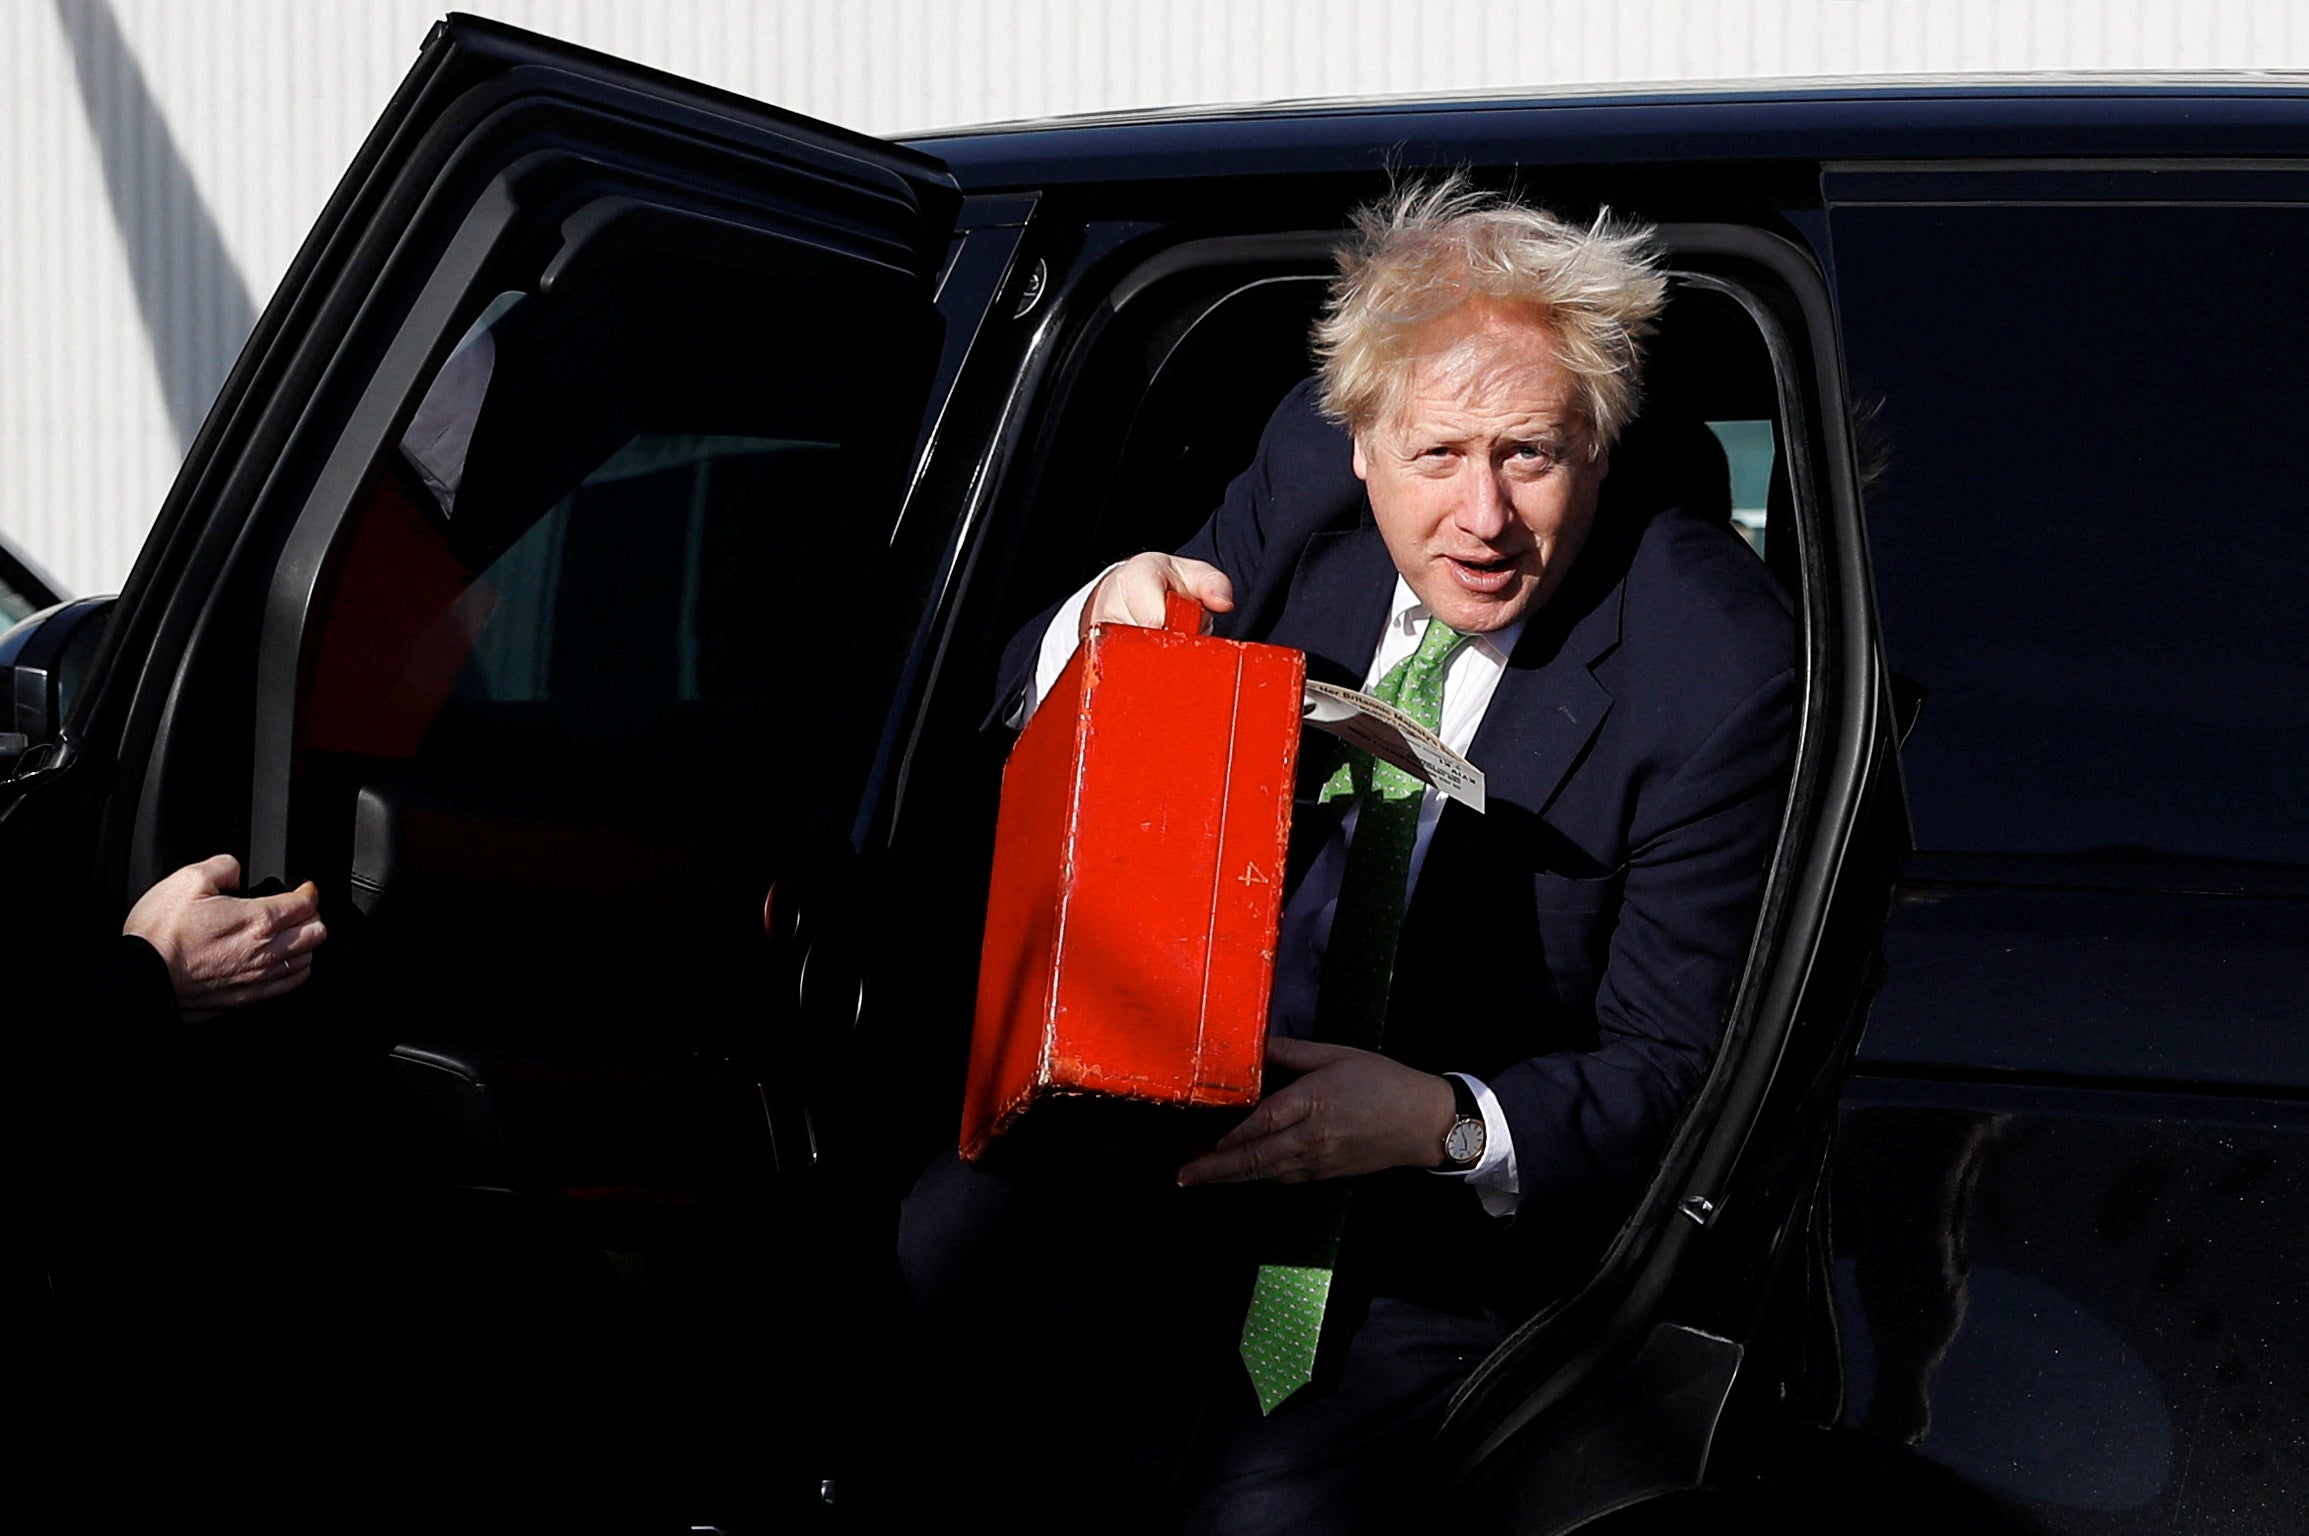 Boris Johnson arrives to board an aircraft in London for a flight to Kiev, Ukraine